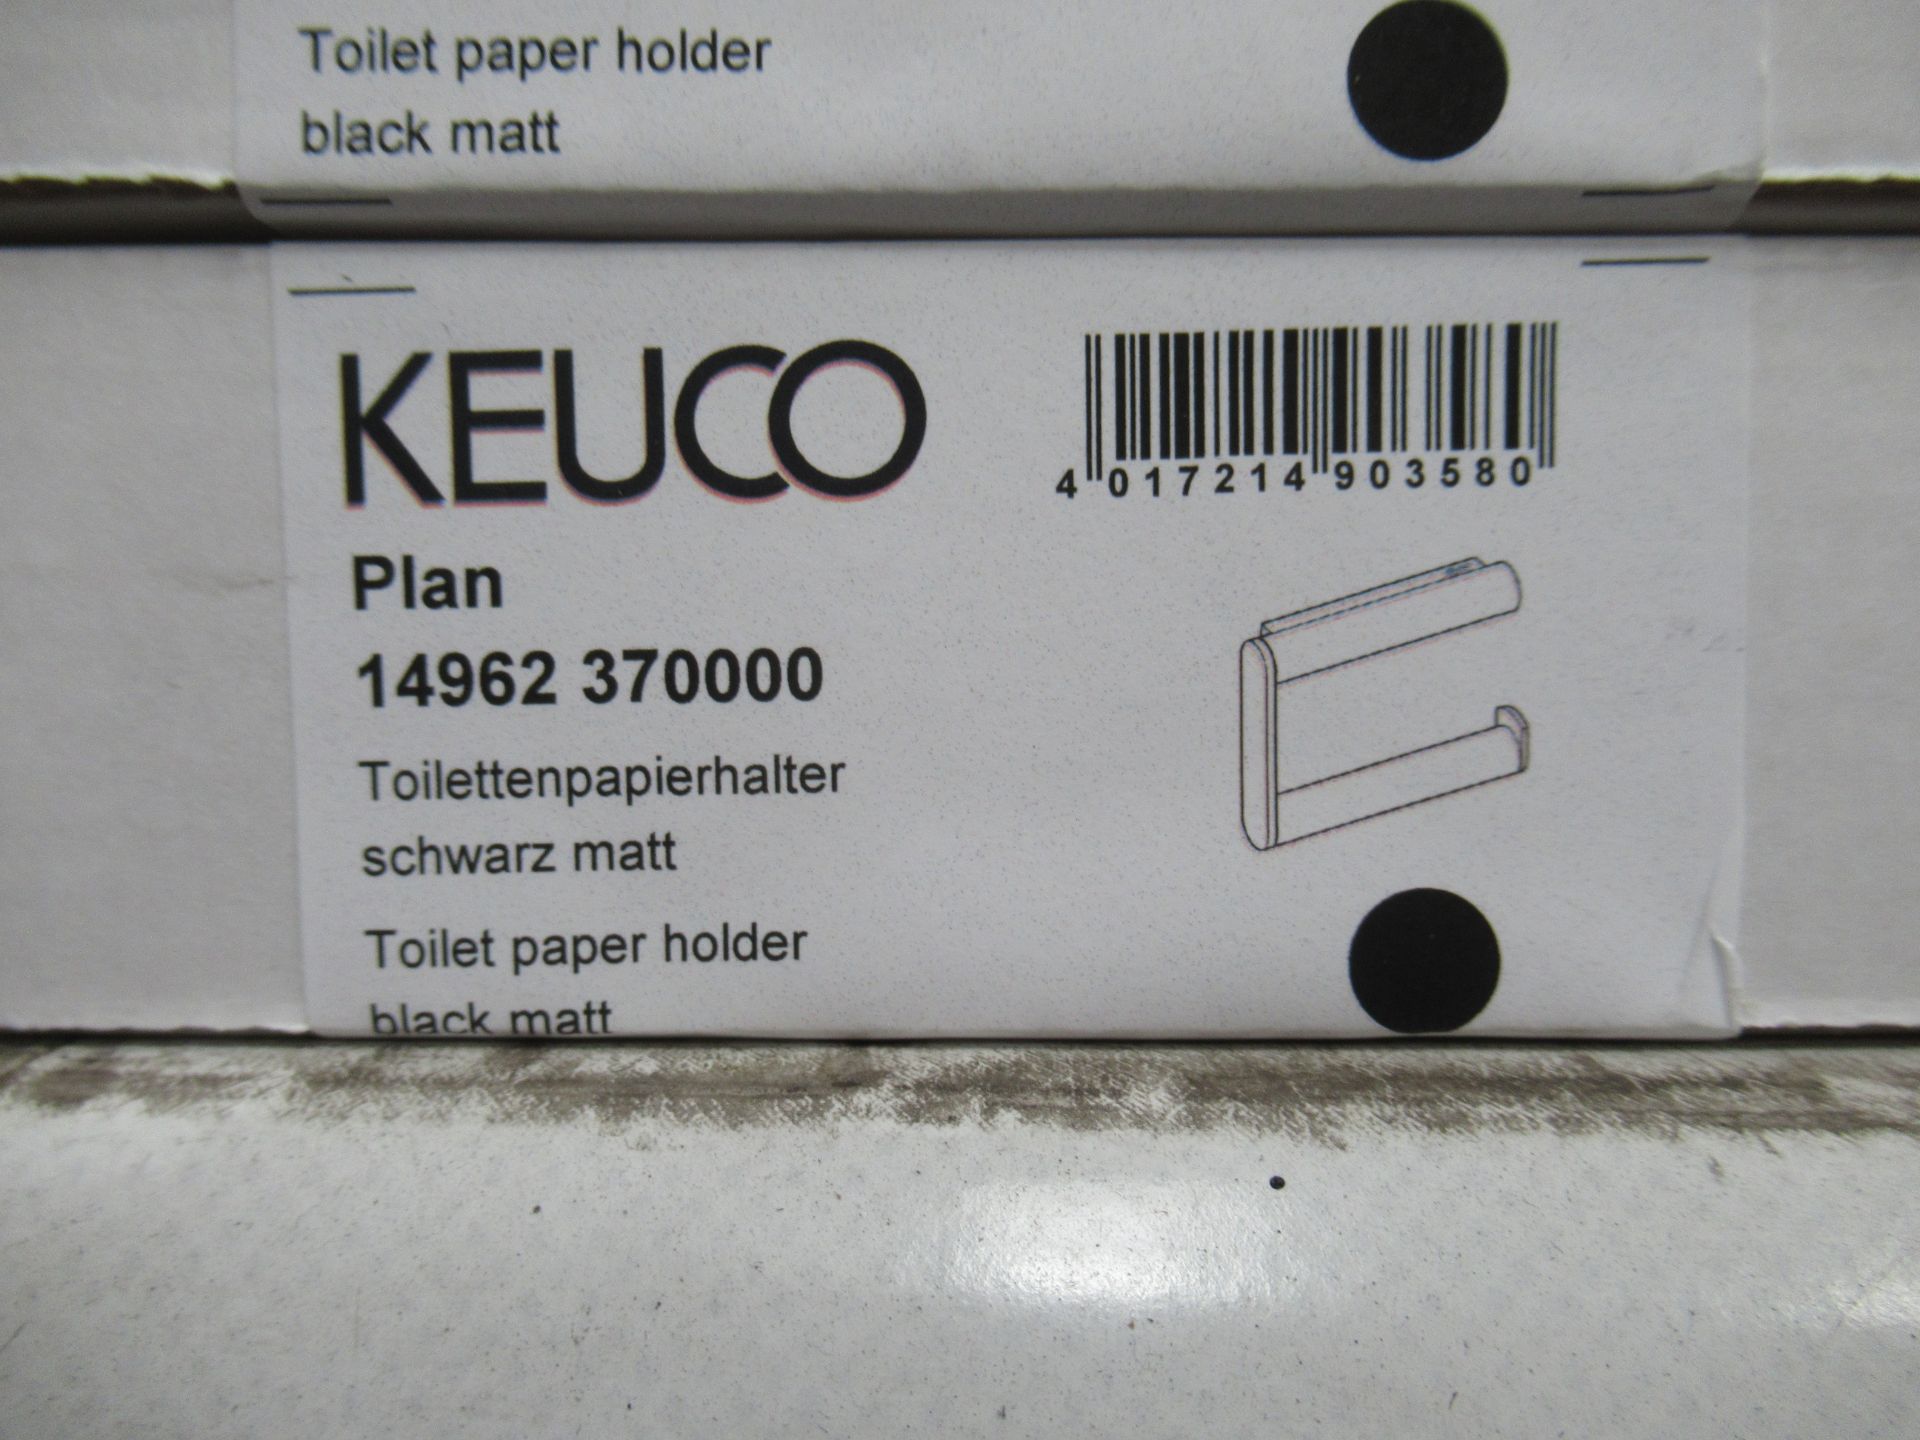 5 x Keuco Plan Toilet Paper Holders, Black Matt, P/N 14962-370000 - Image 2 of 2